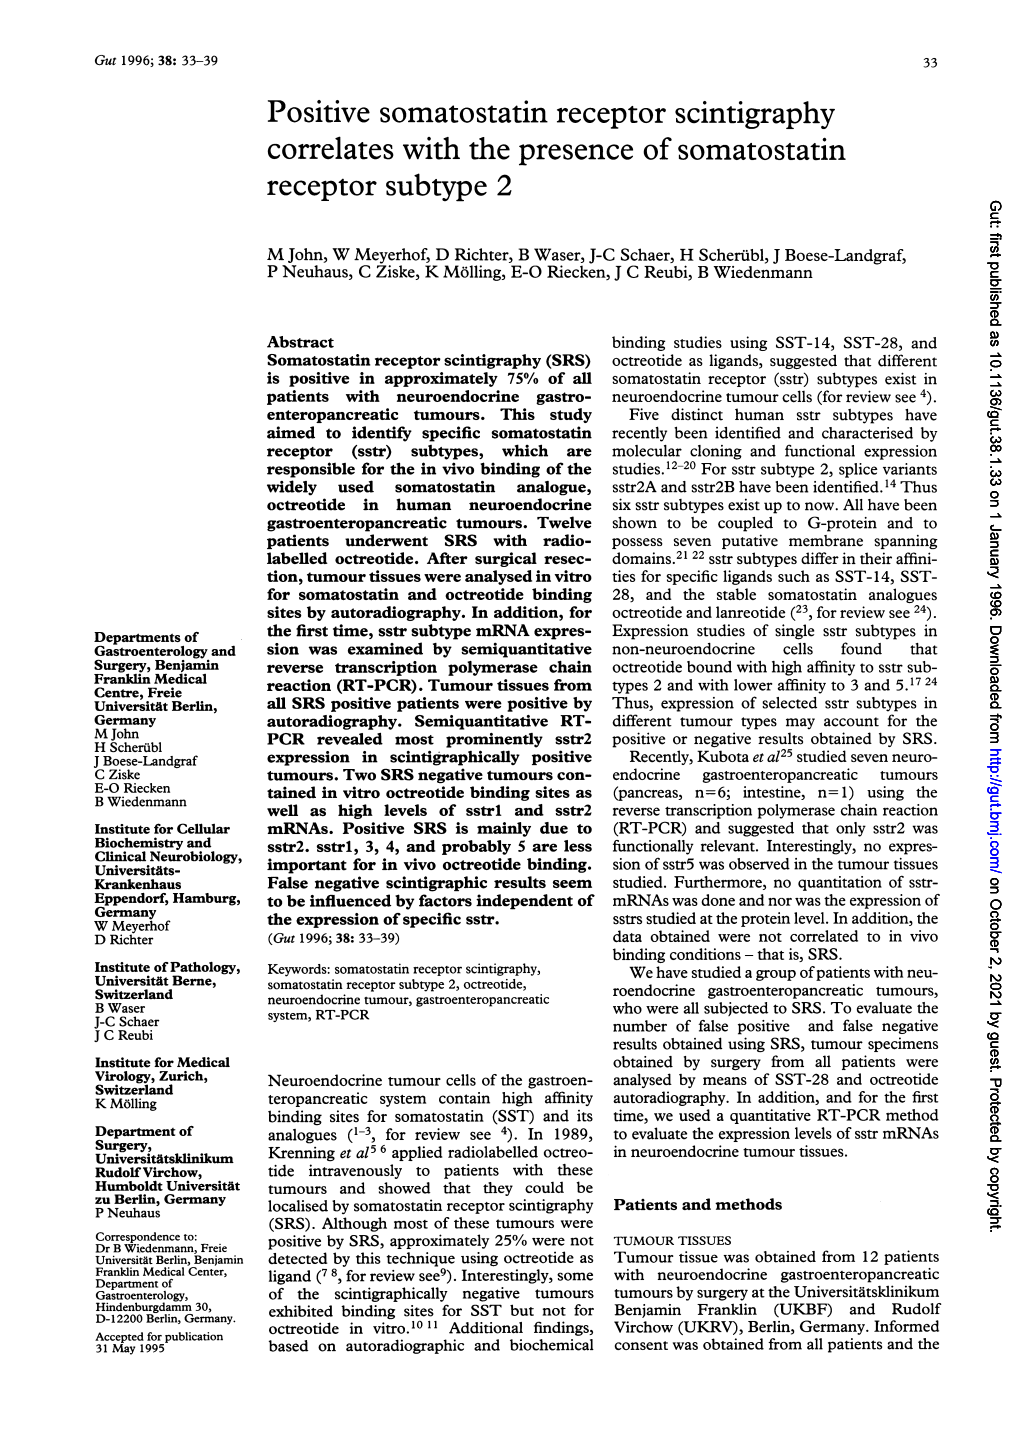 Positive Somatostatin Receptor Scintigraphy Correlates with the Presence of Somatostatin